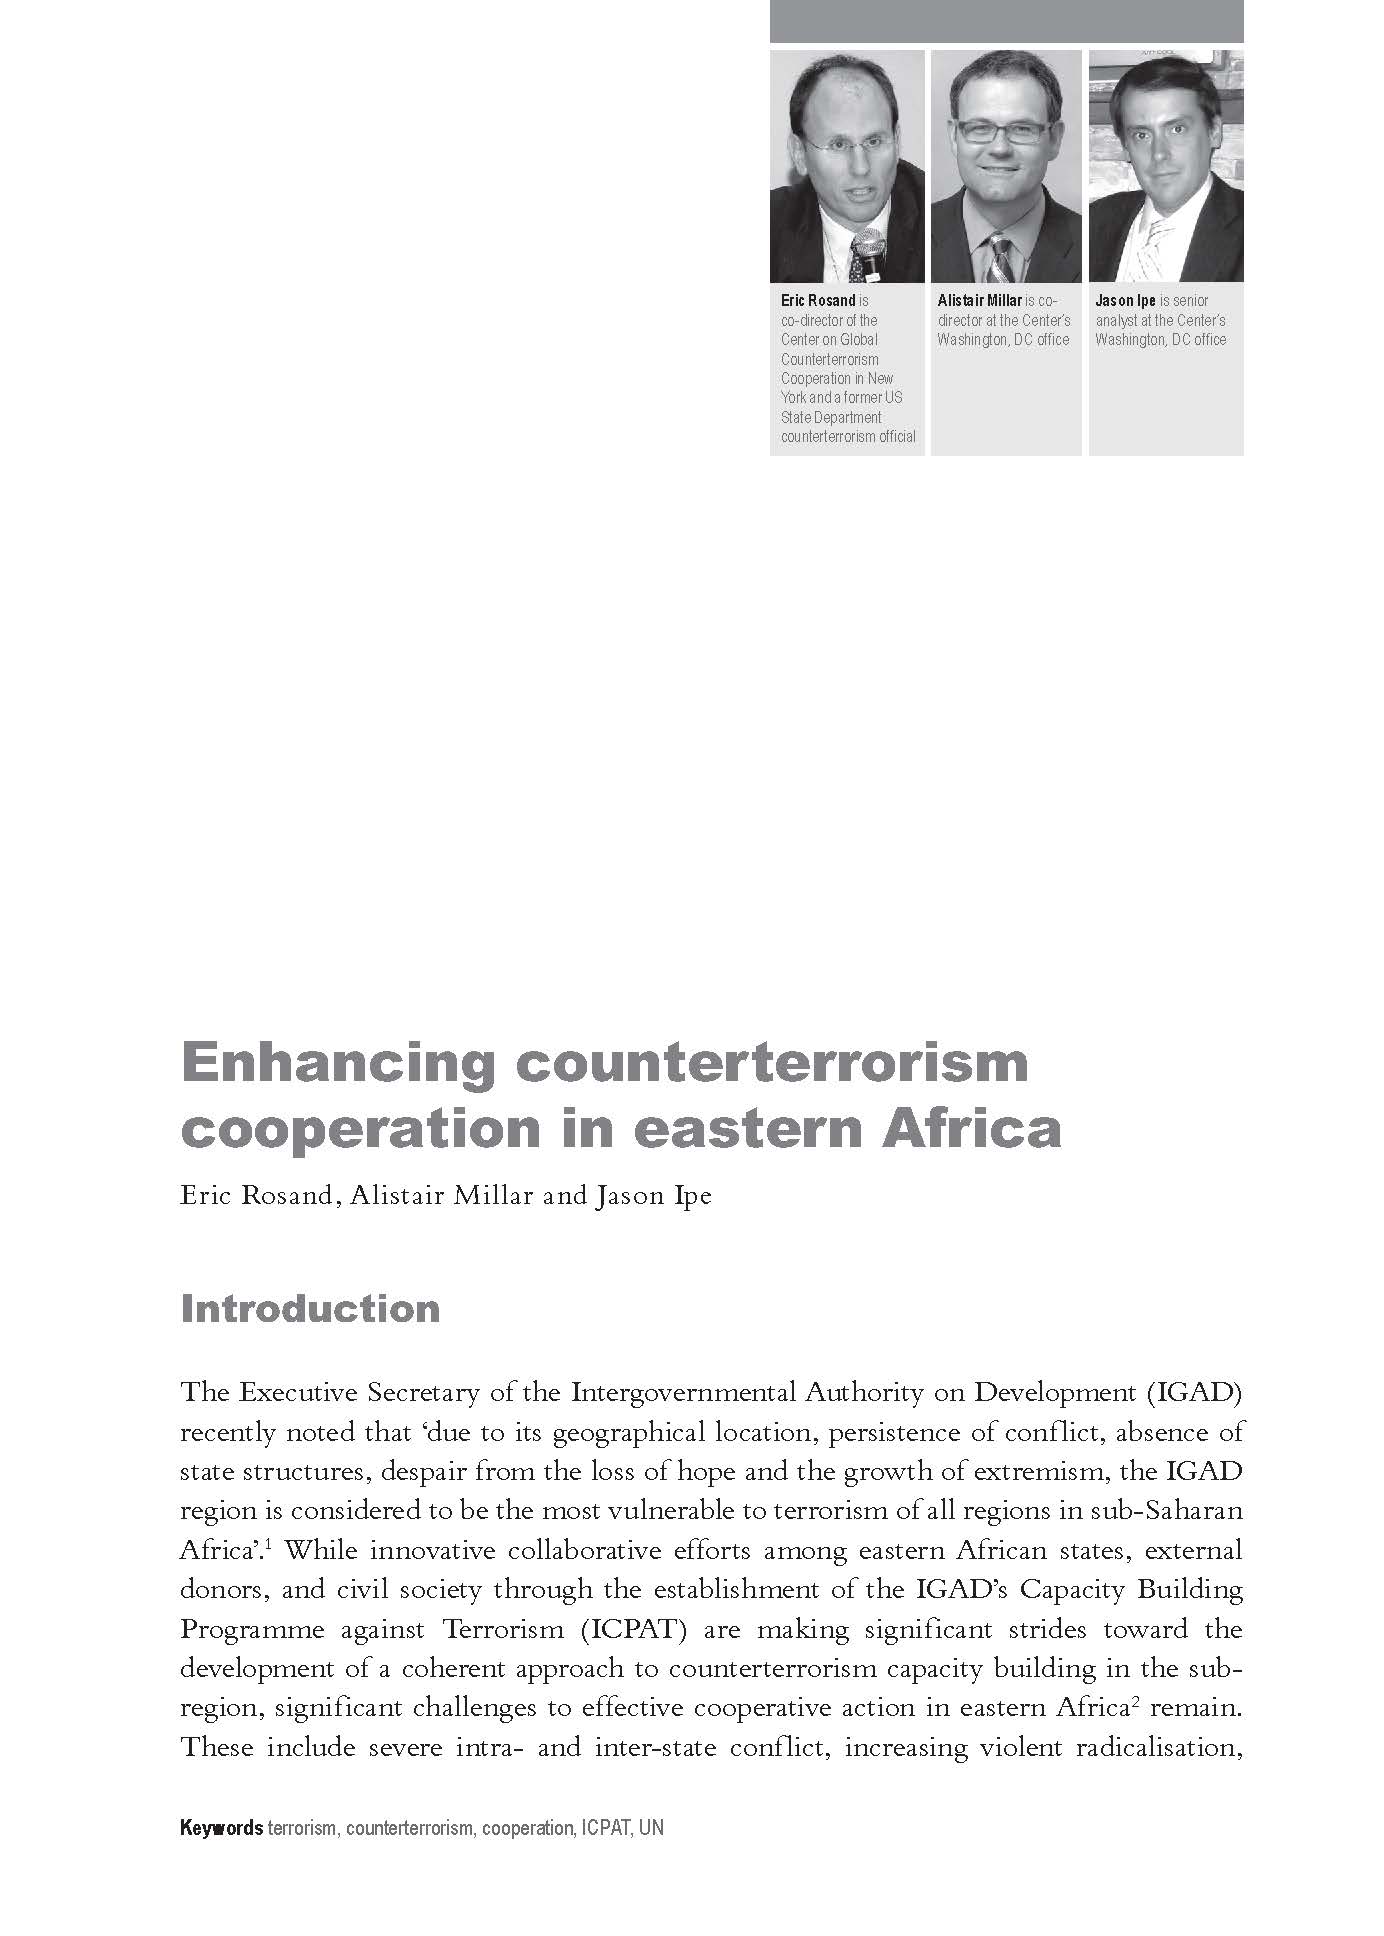 Enhancing Counterterrorism Cooperation in Eastern Africa